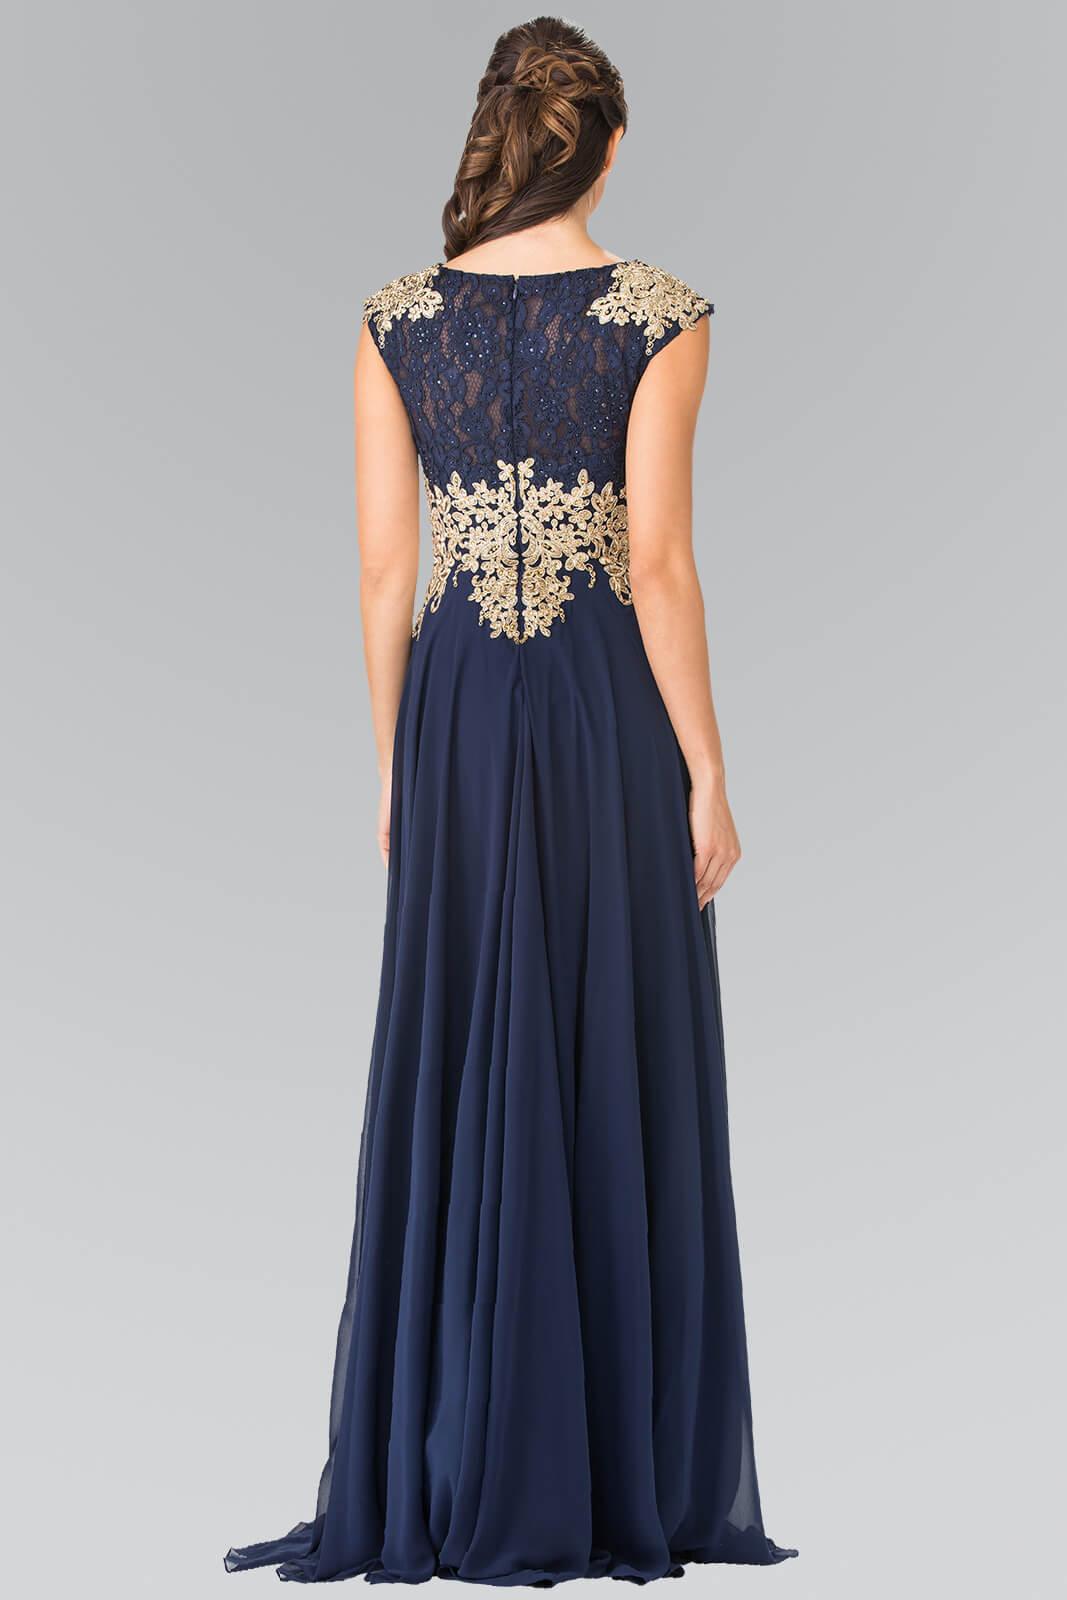 Plus Size Long Prom Dress Evening Gown - The Dress Outlet Elizabeth K